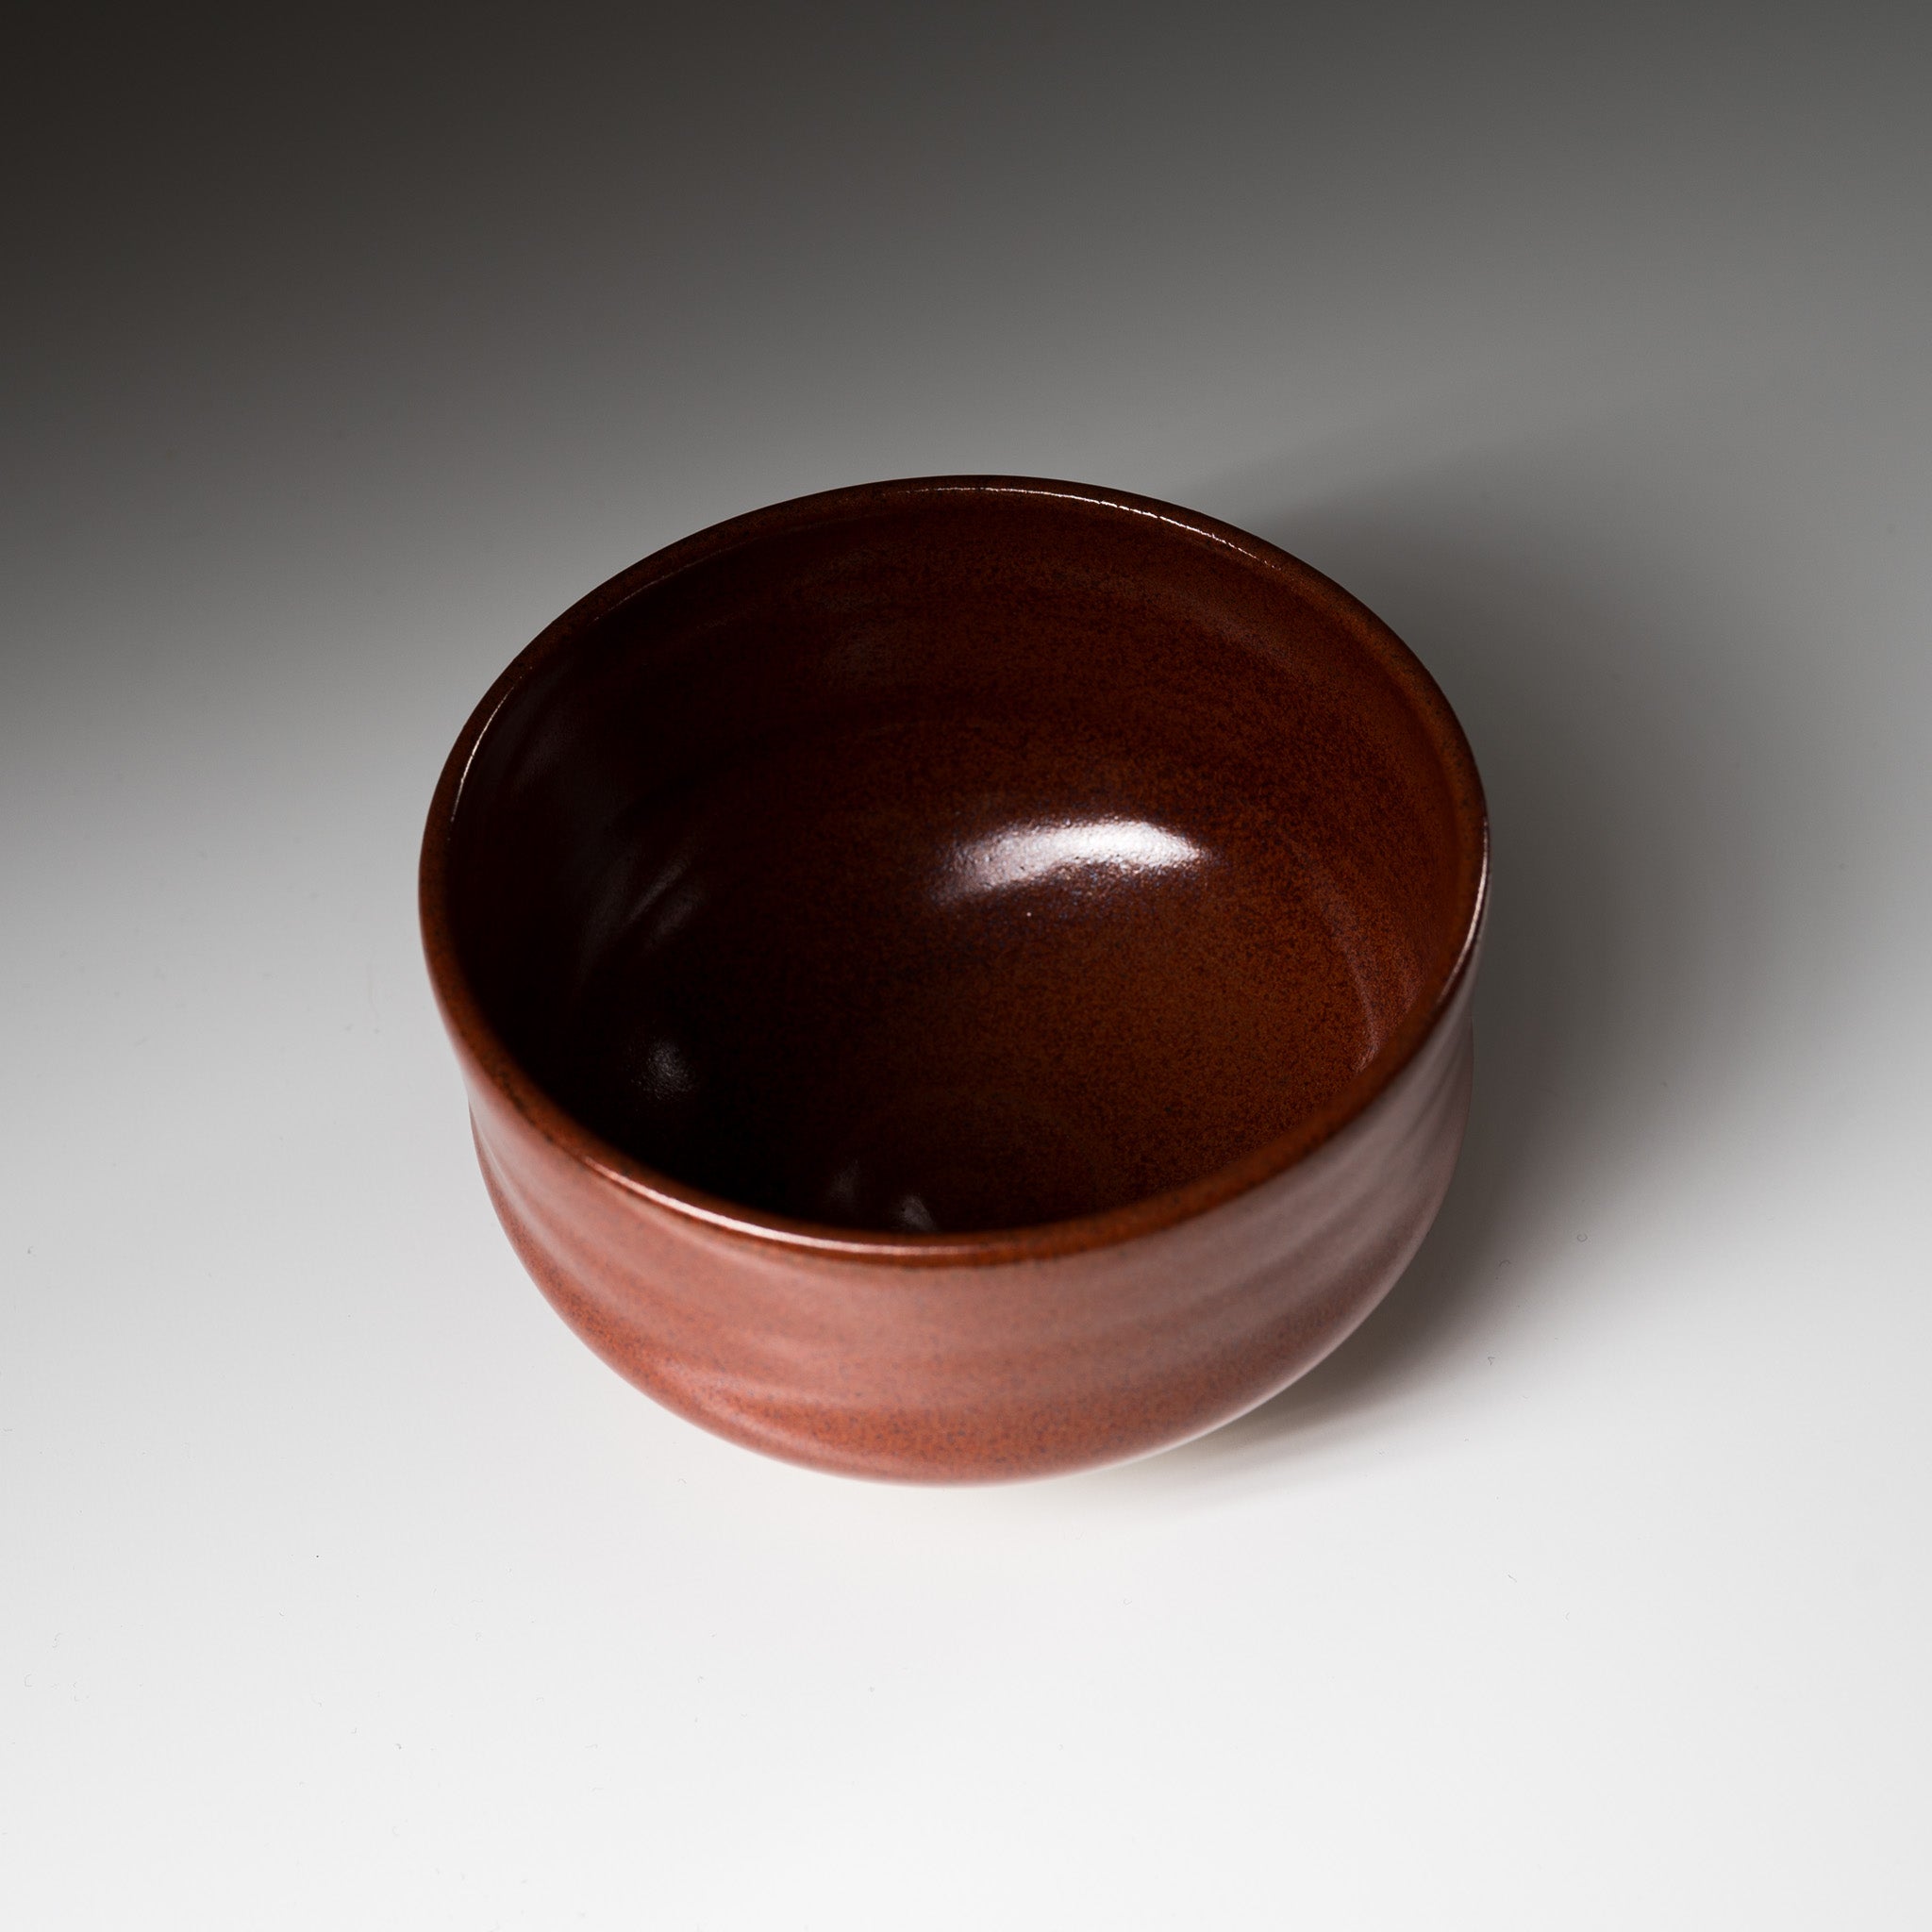 Kyo Kiyomizu Ware Handmade Matcha Bowl - Red Brown / 京焼・清水焼き 抹茶碗